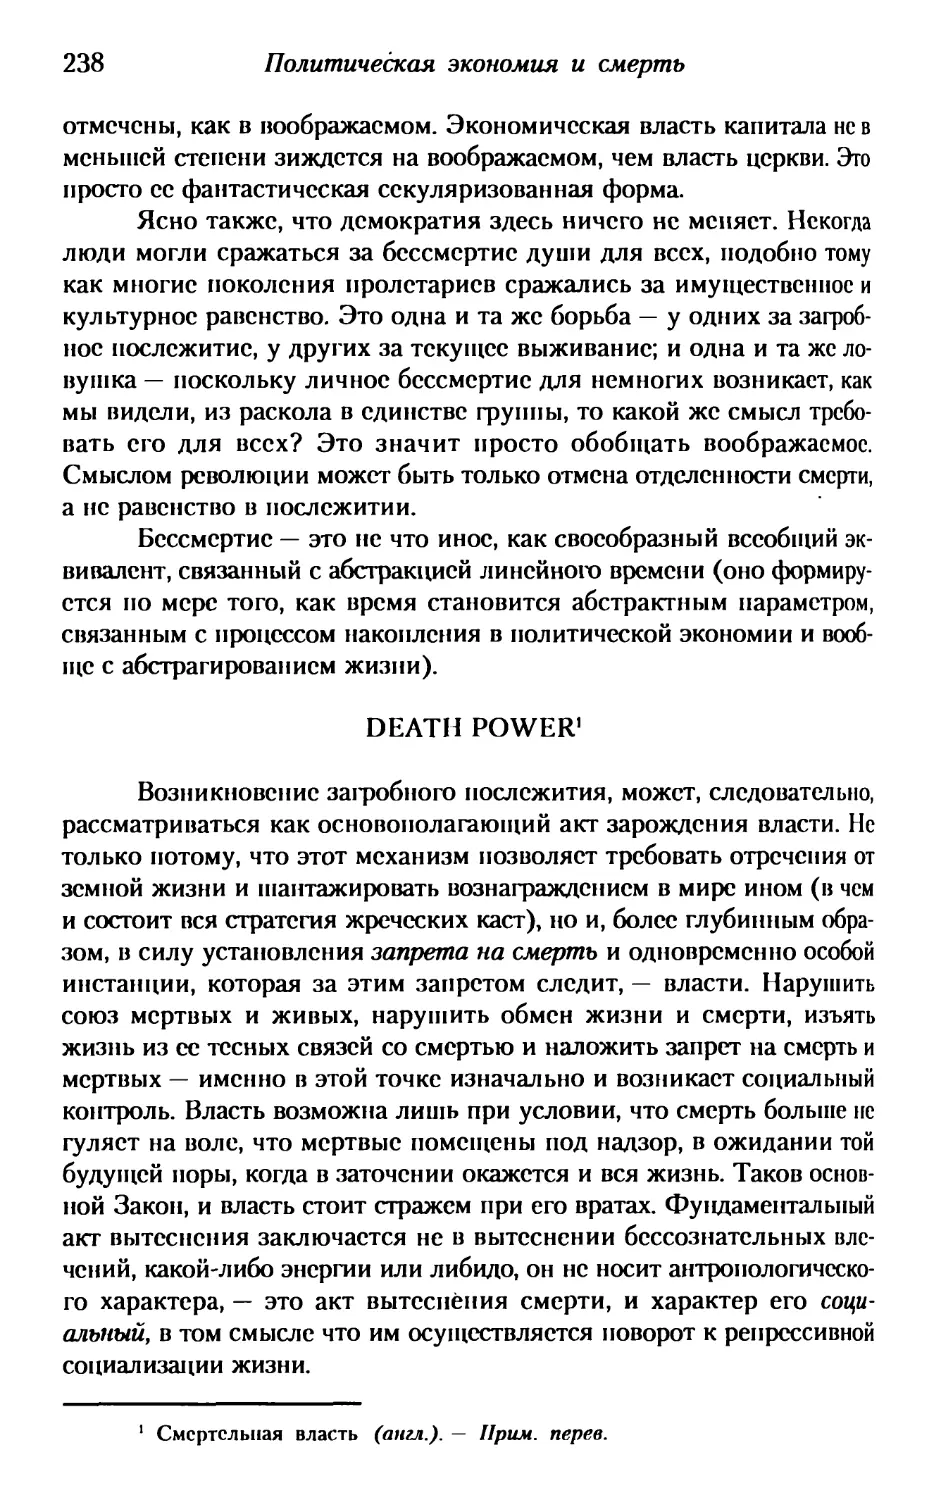 Death power